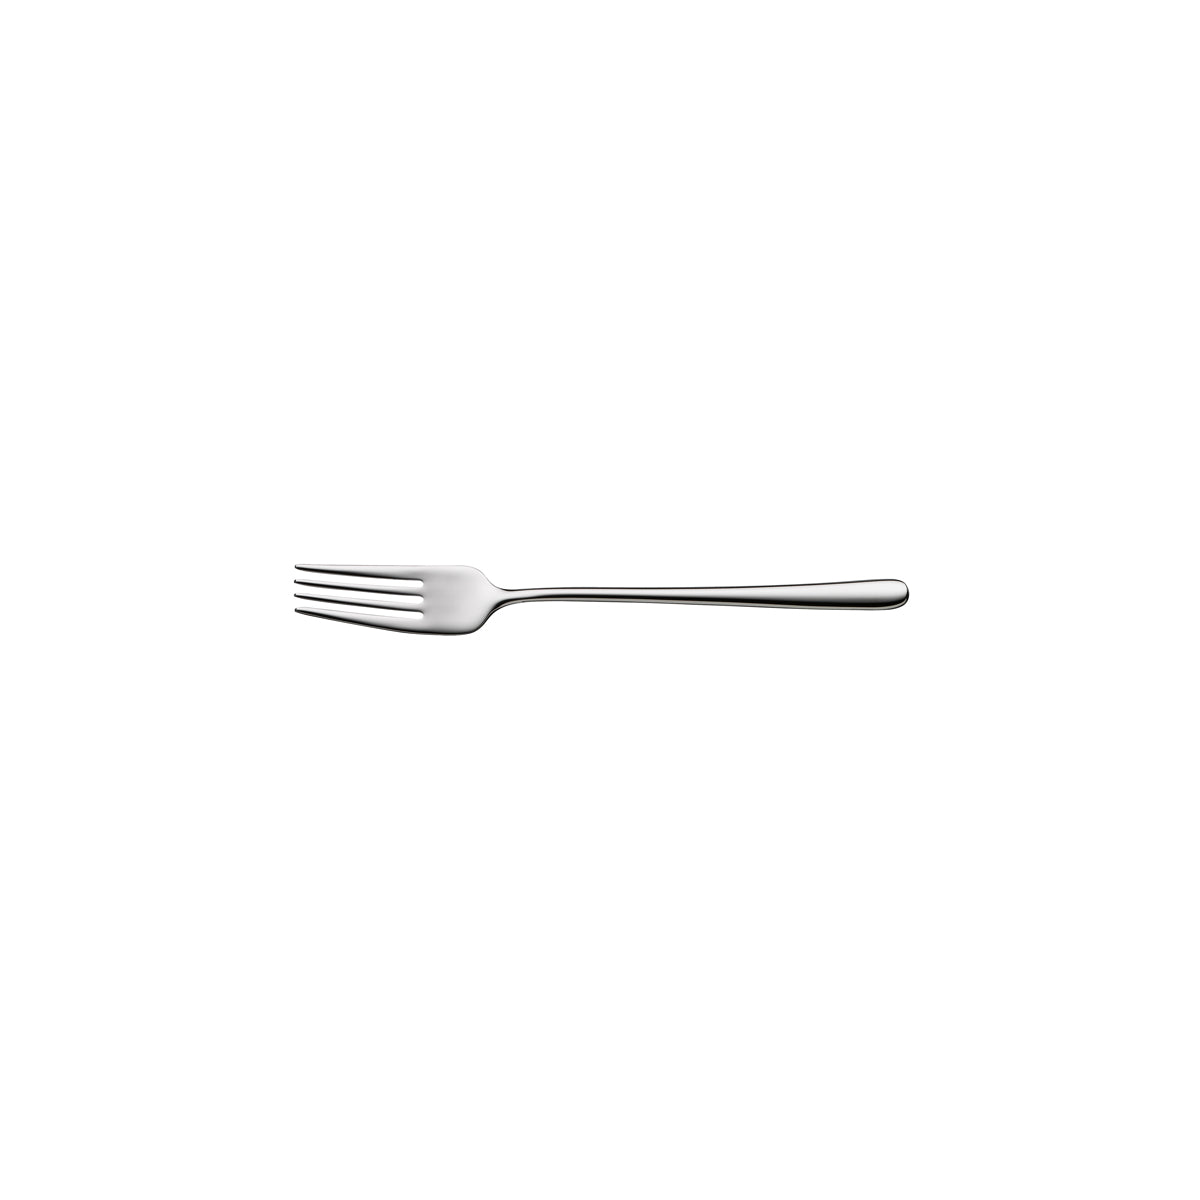 Wmf Scala Dessert Fork 18/10 190mm: Pack of 12